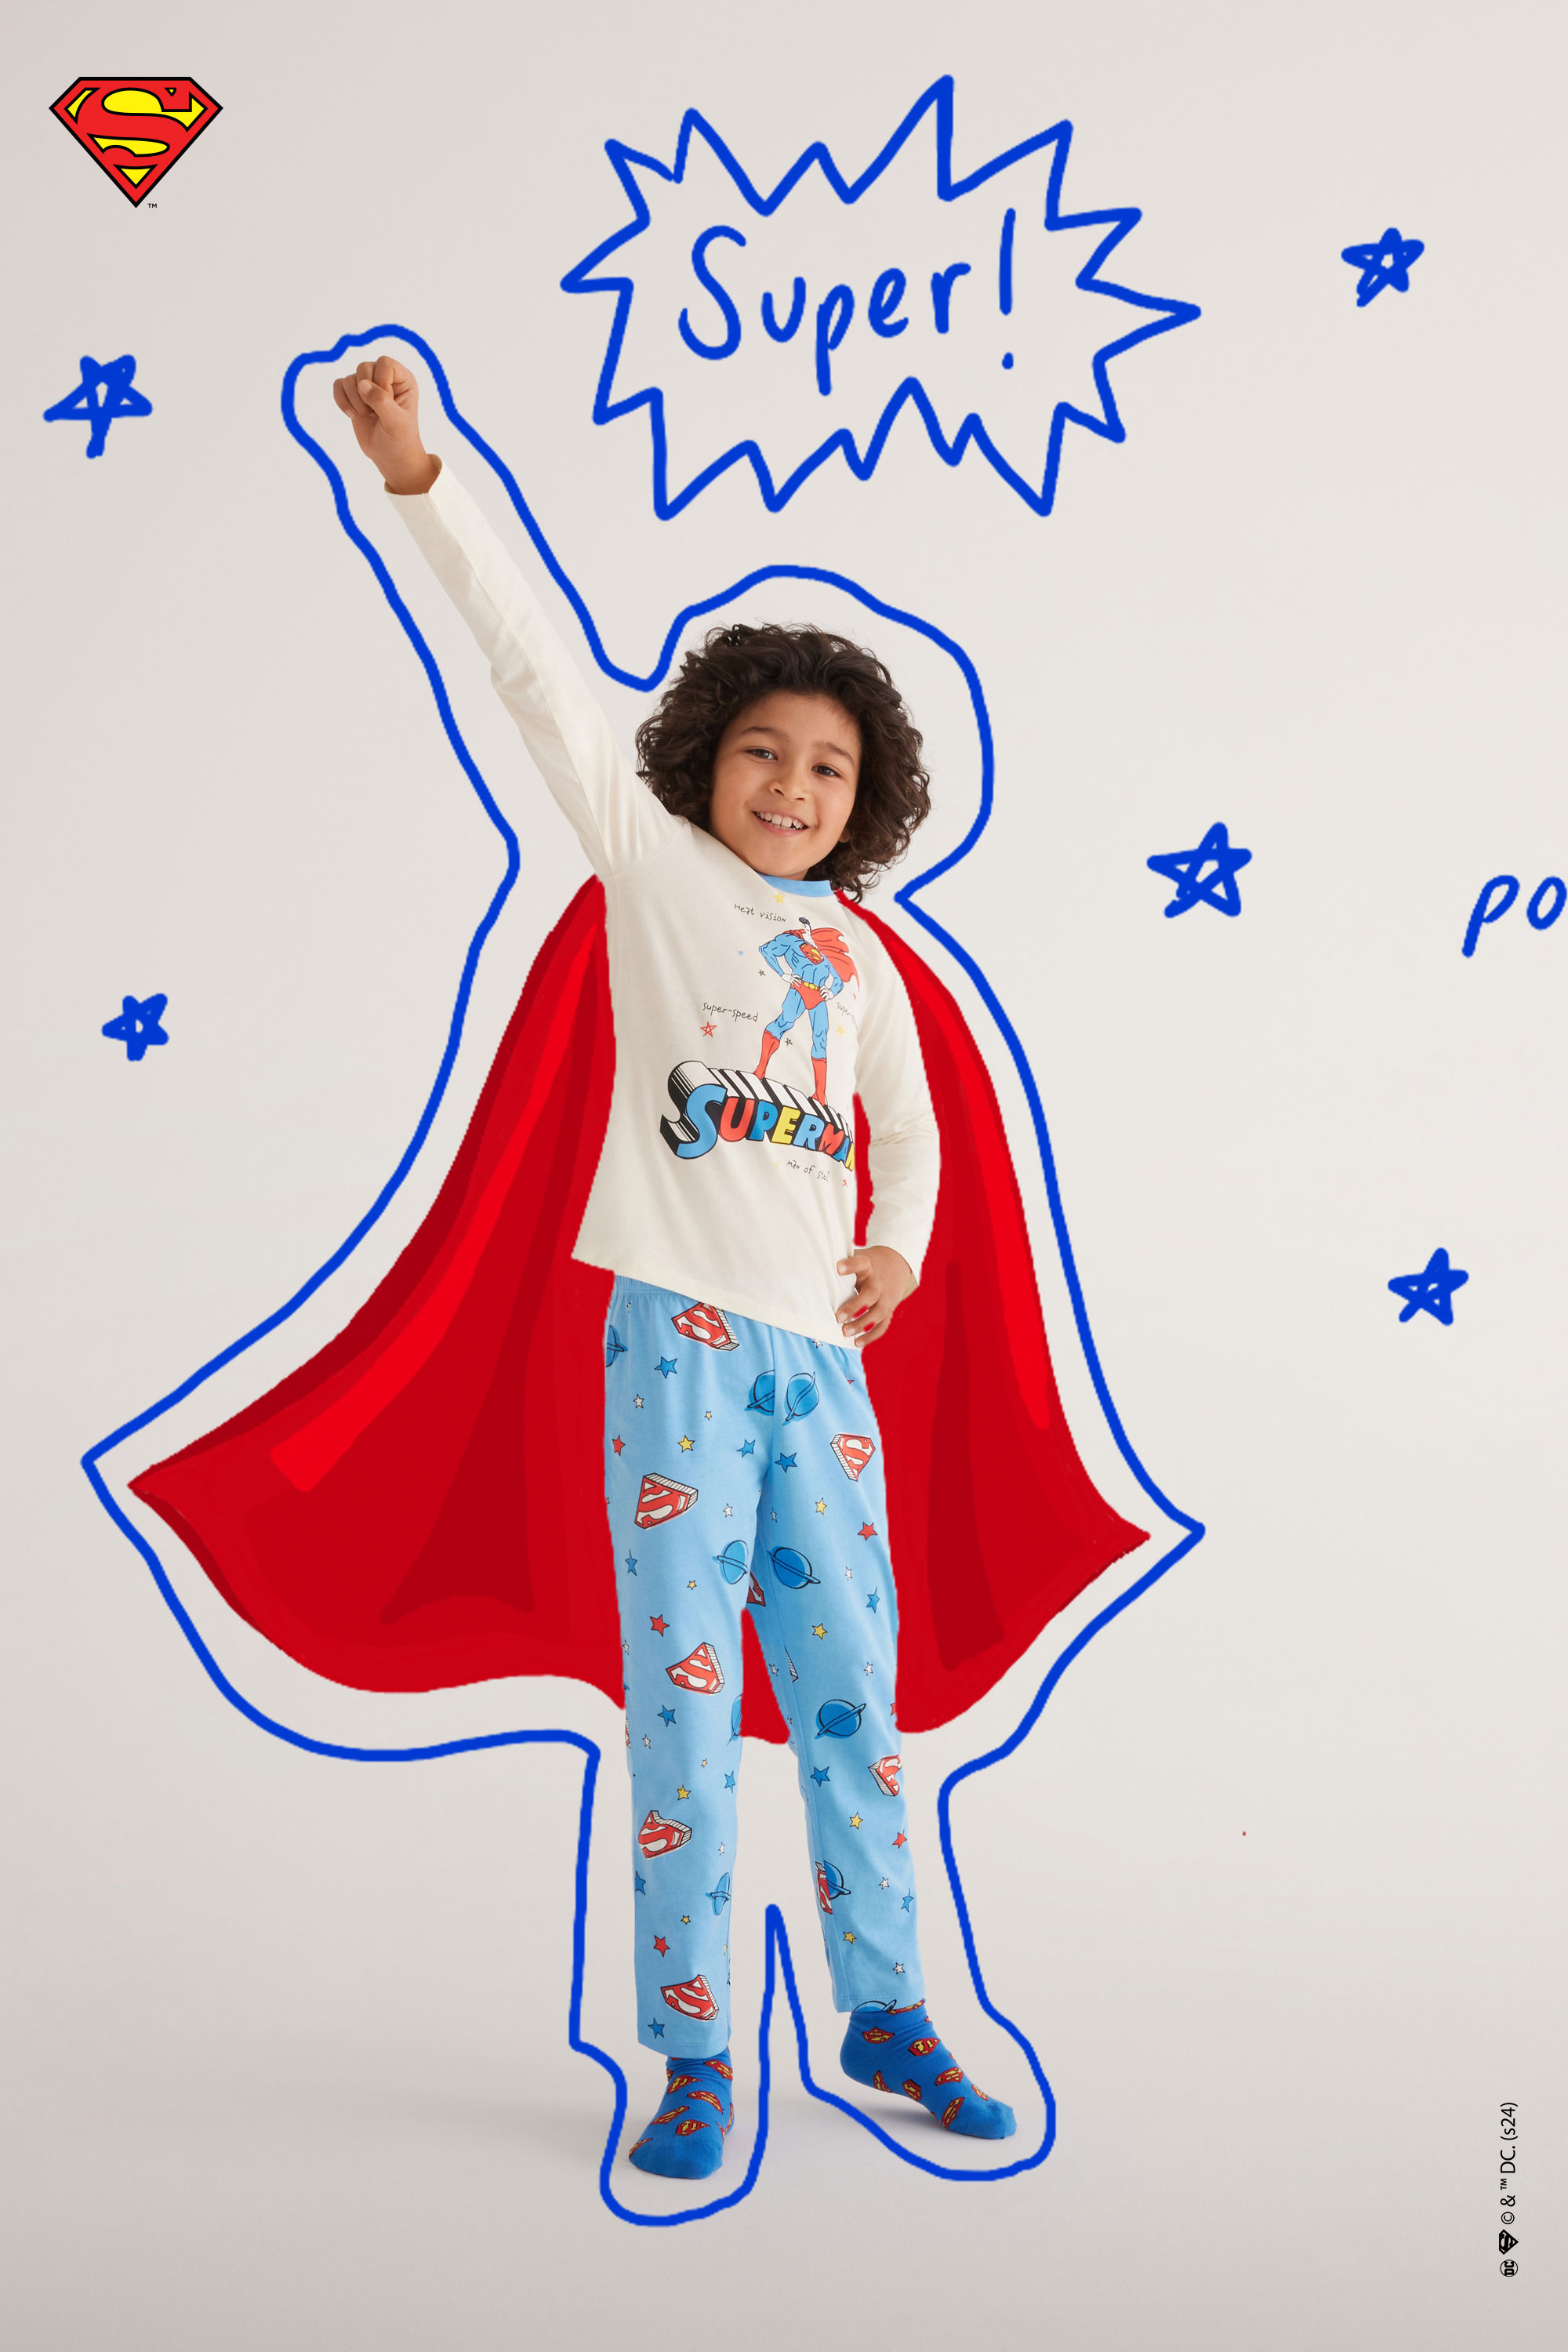 Boys’ Long Cotton Pyjamas with Superman Print